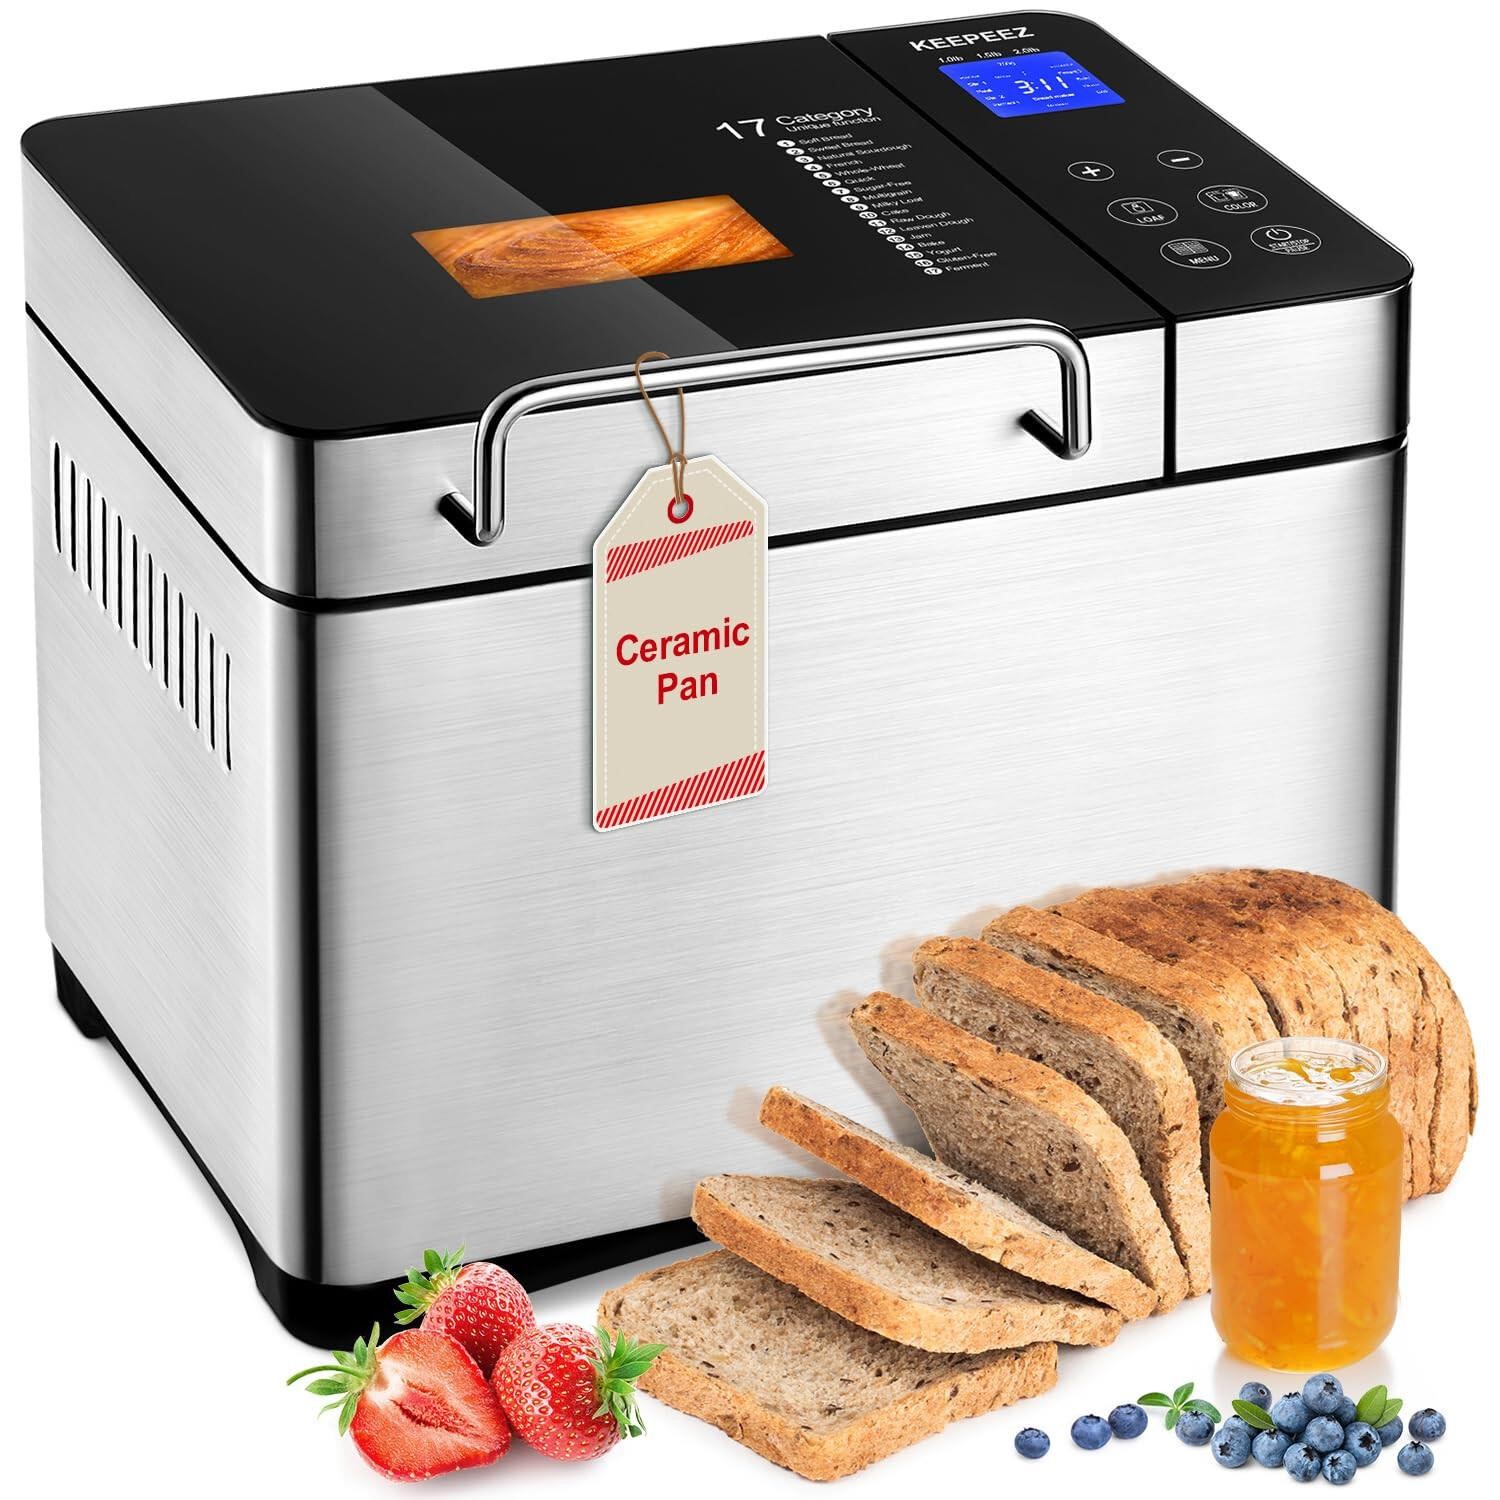 KEEPEEZ Bread Maker Machine, 2LB Premium Stainless